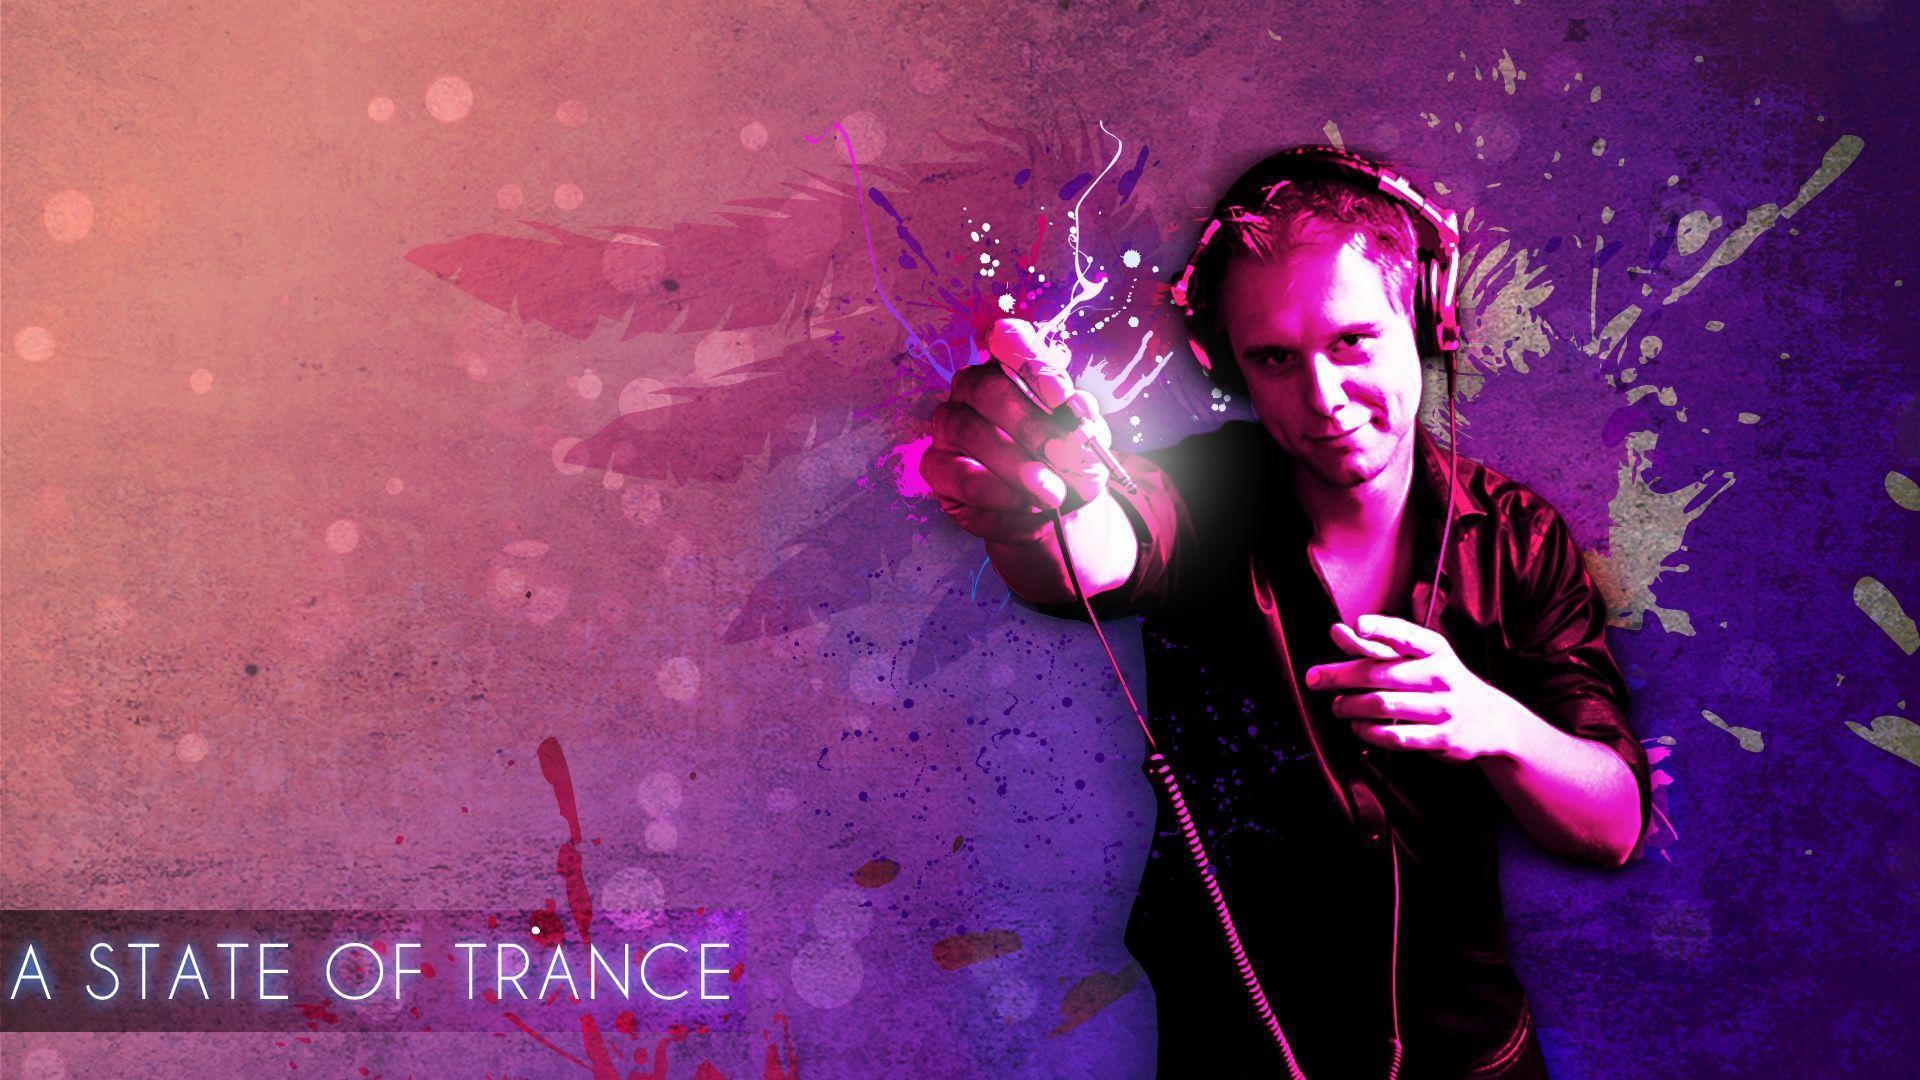 Free HQ Armin Van Buuren A State Of Trance HD Wallpaper HQ